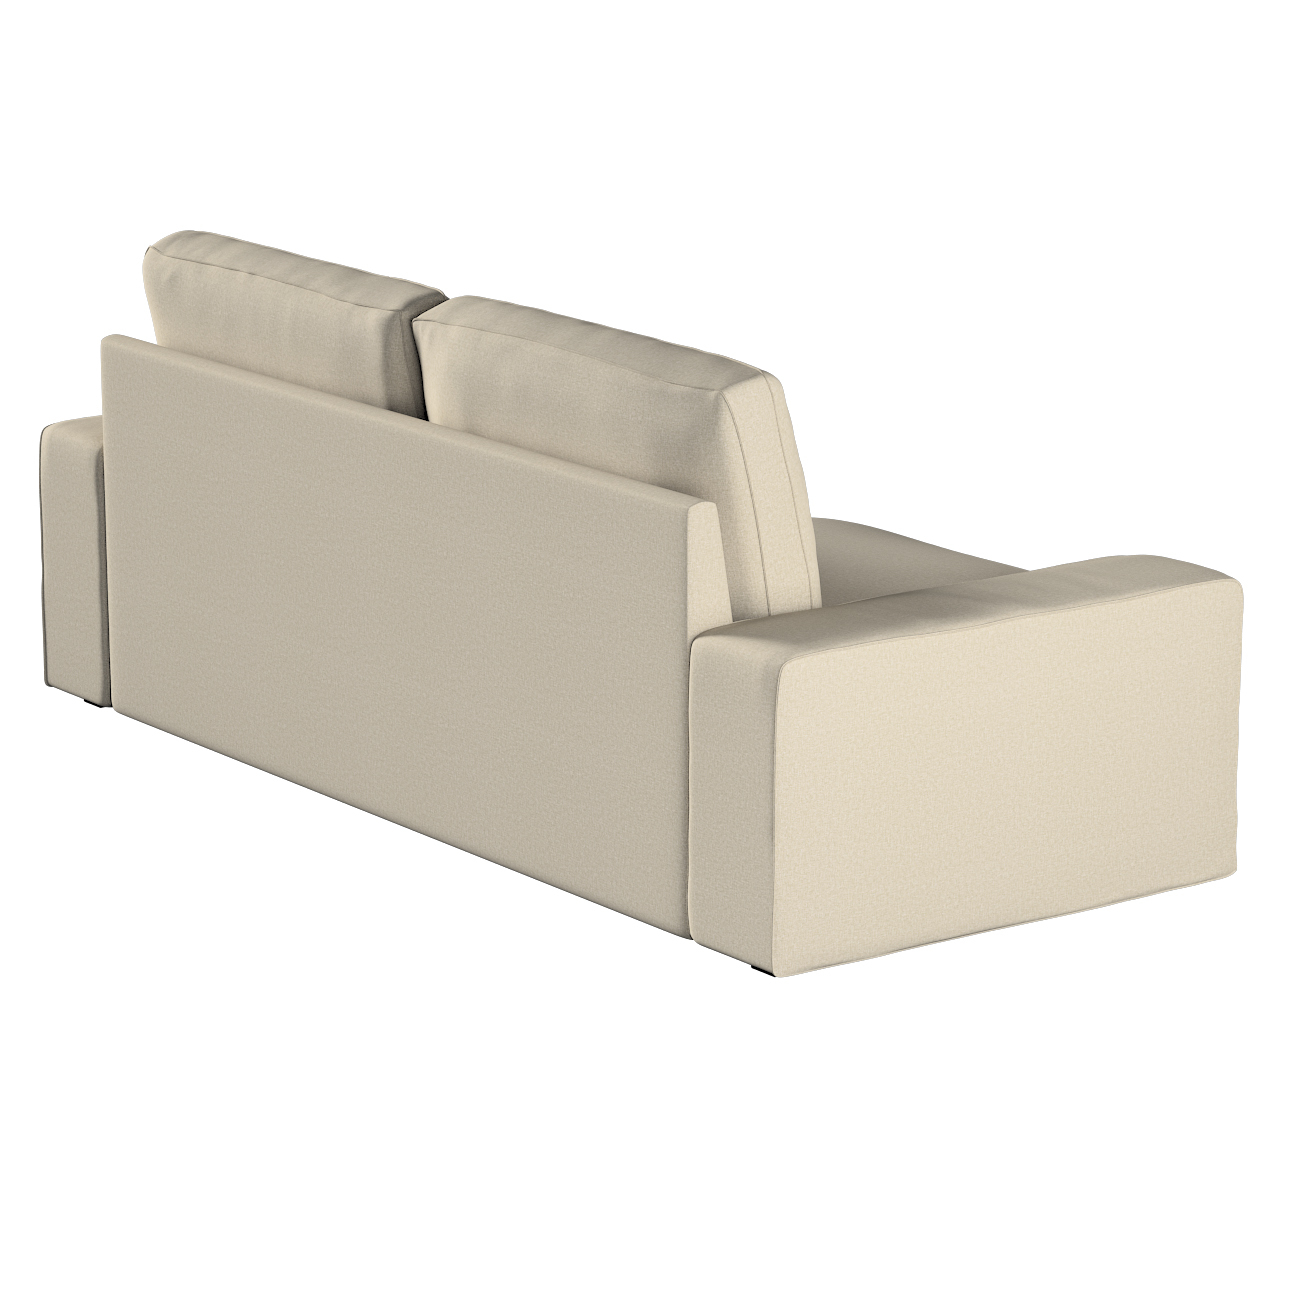 Bezug für Kivik 3-Sitzer Sofa, grau-beige, Bezug für Sofa Kivik 3-Sitzer, A günstig online kaufen